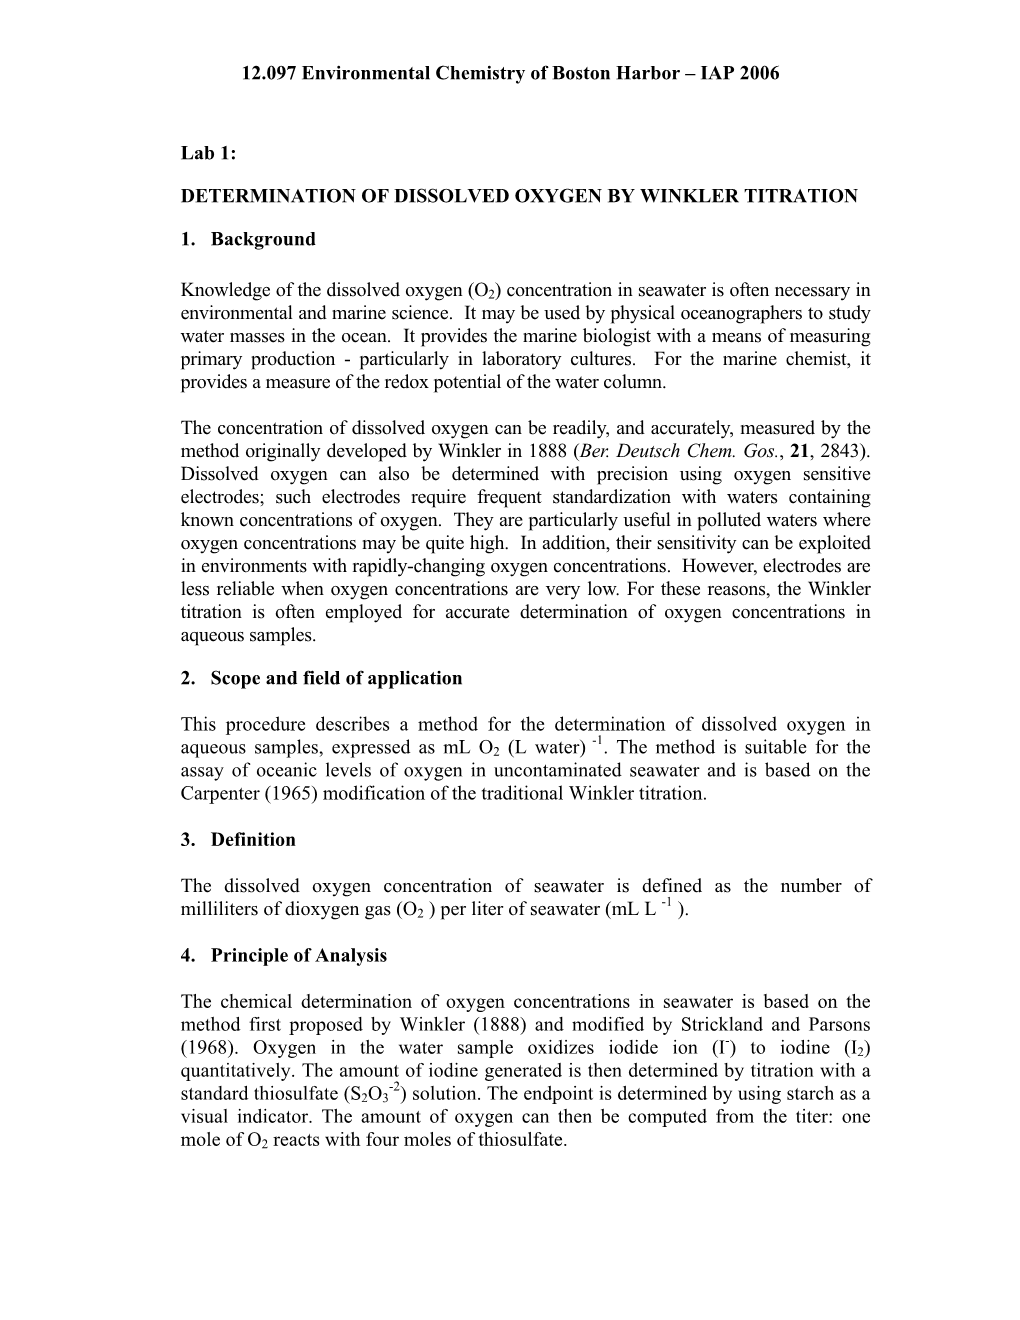 Determination of Dissolved Oxygen by Winkler Titration